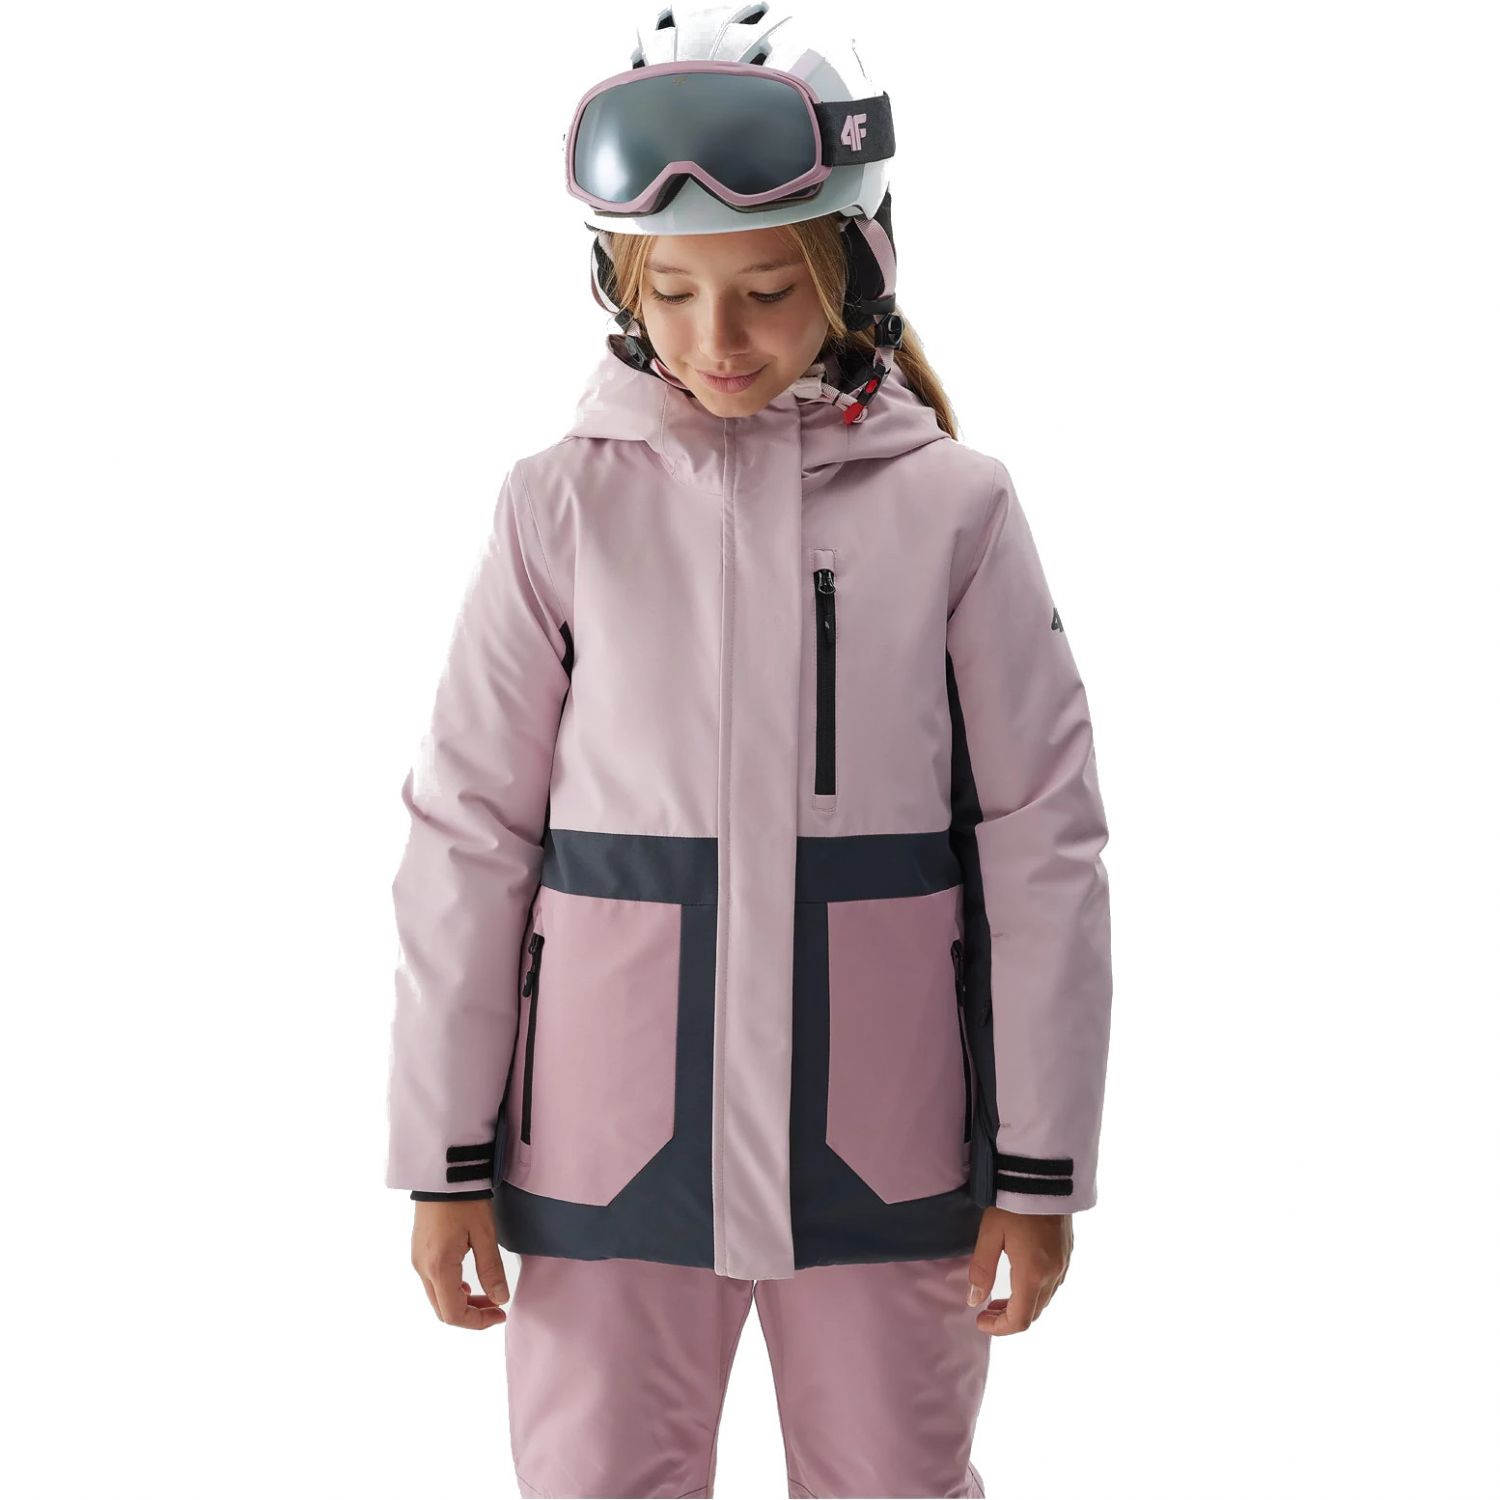 4F Eva, ski jas, junior, roze